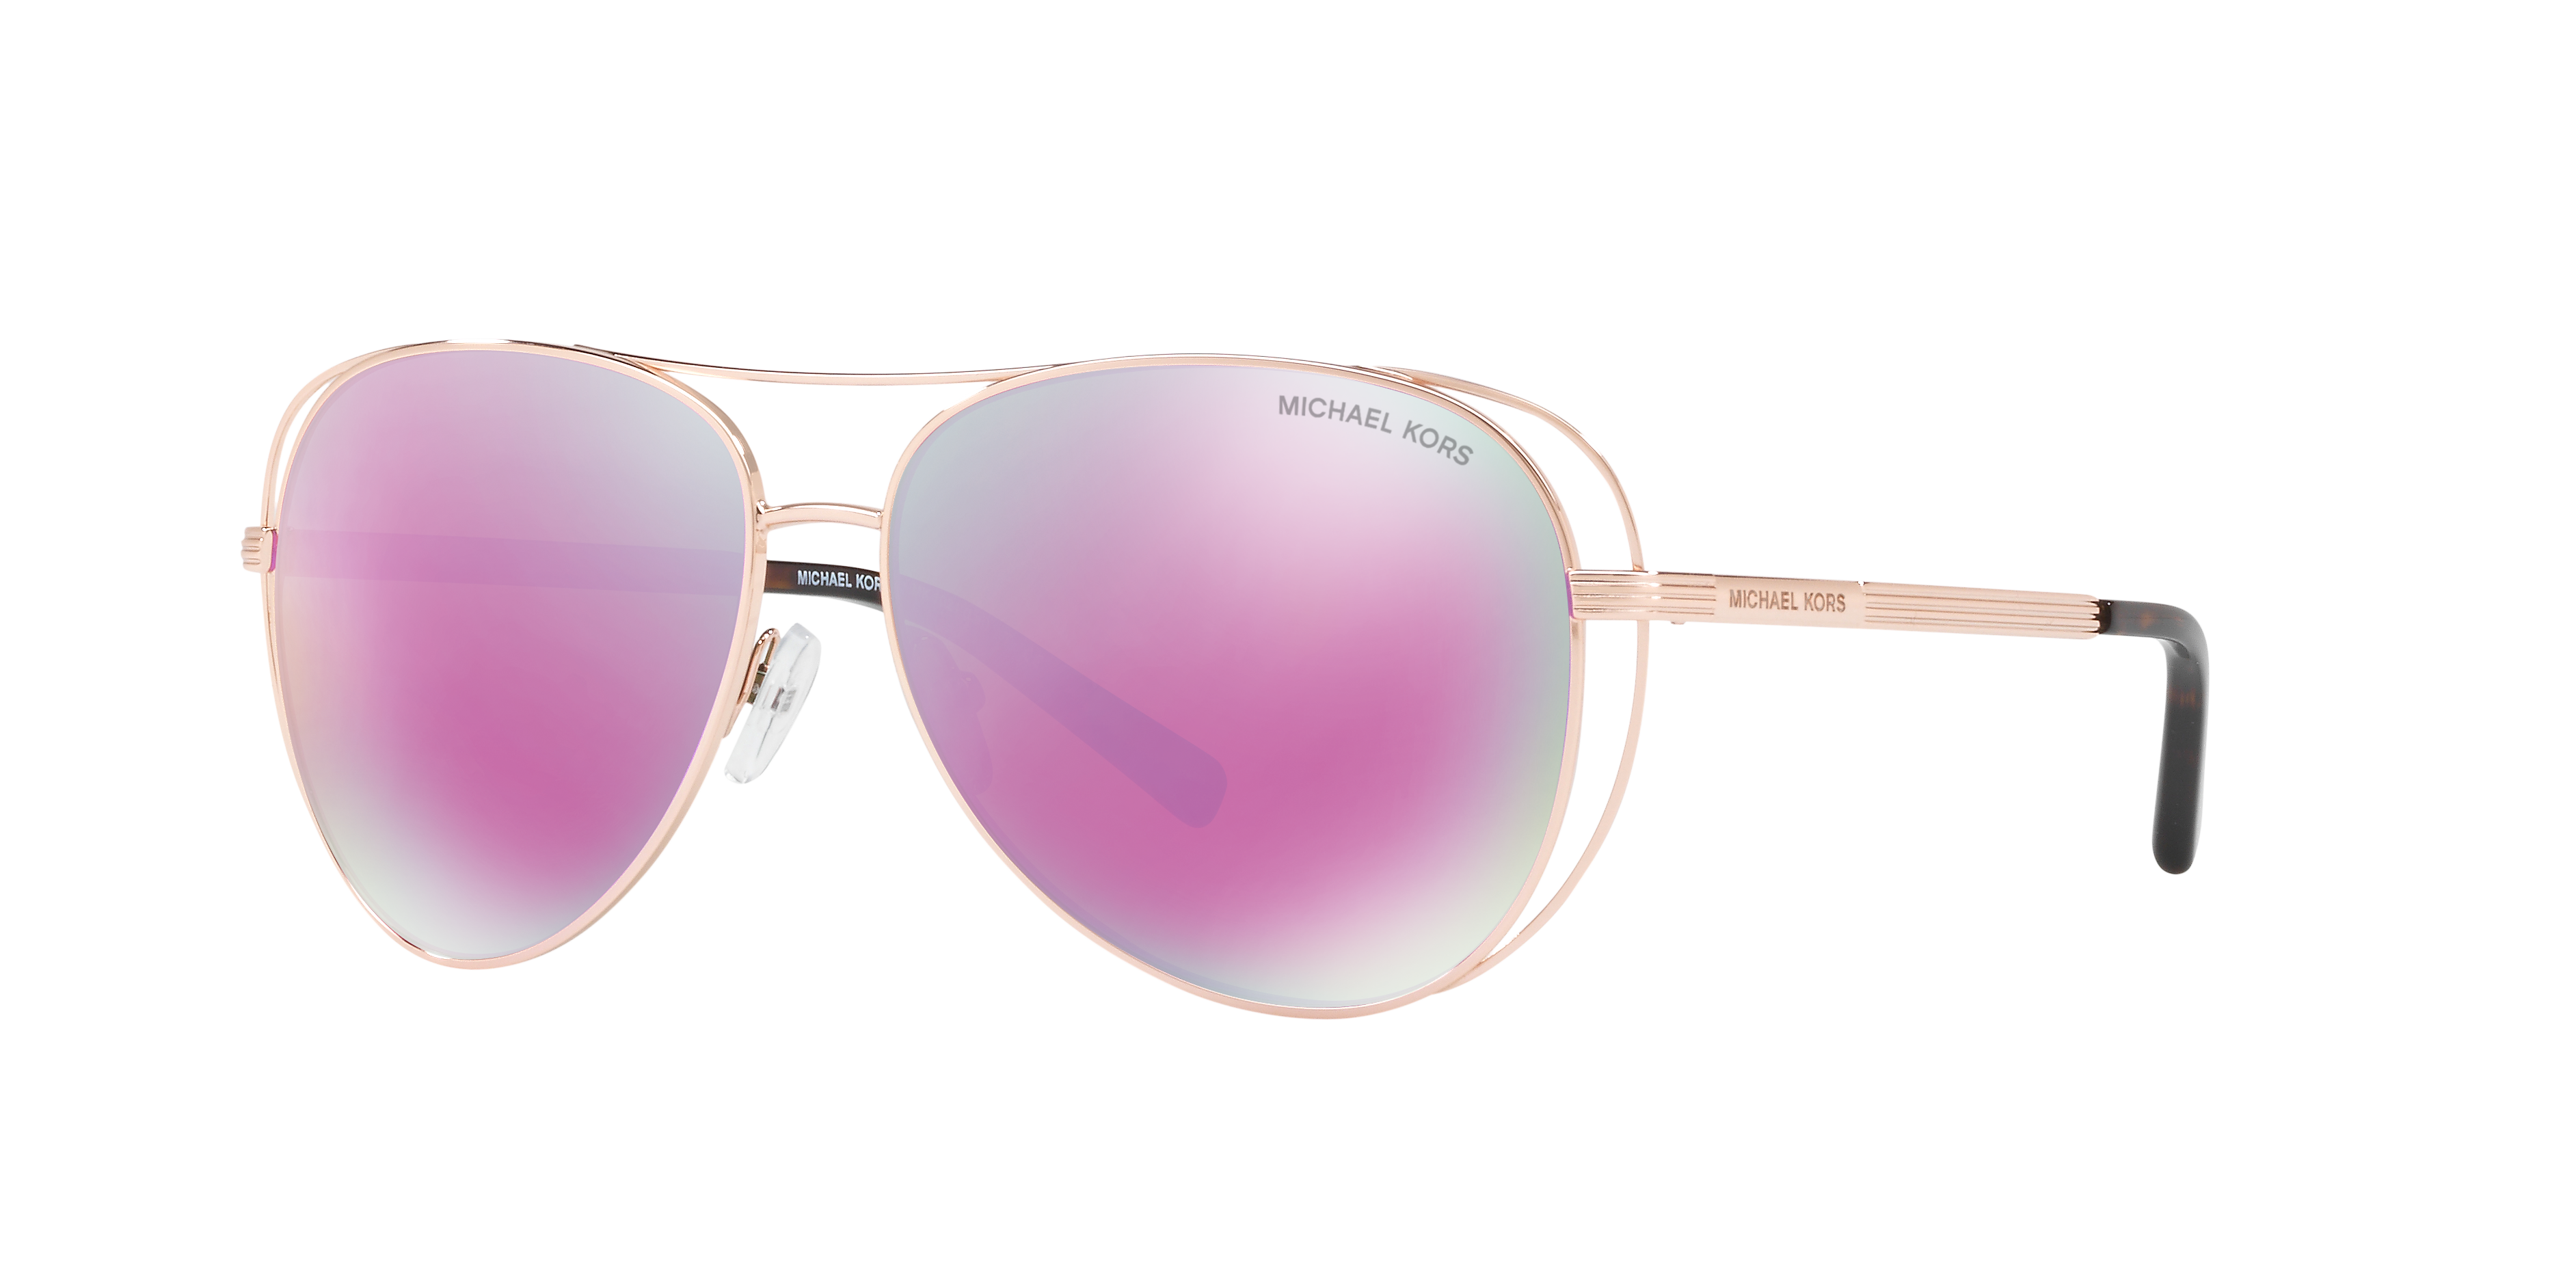 Angle_Left01 Michael Kors MK 1024 Sunglasses Pink / Gold